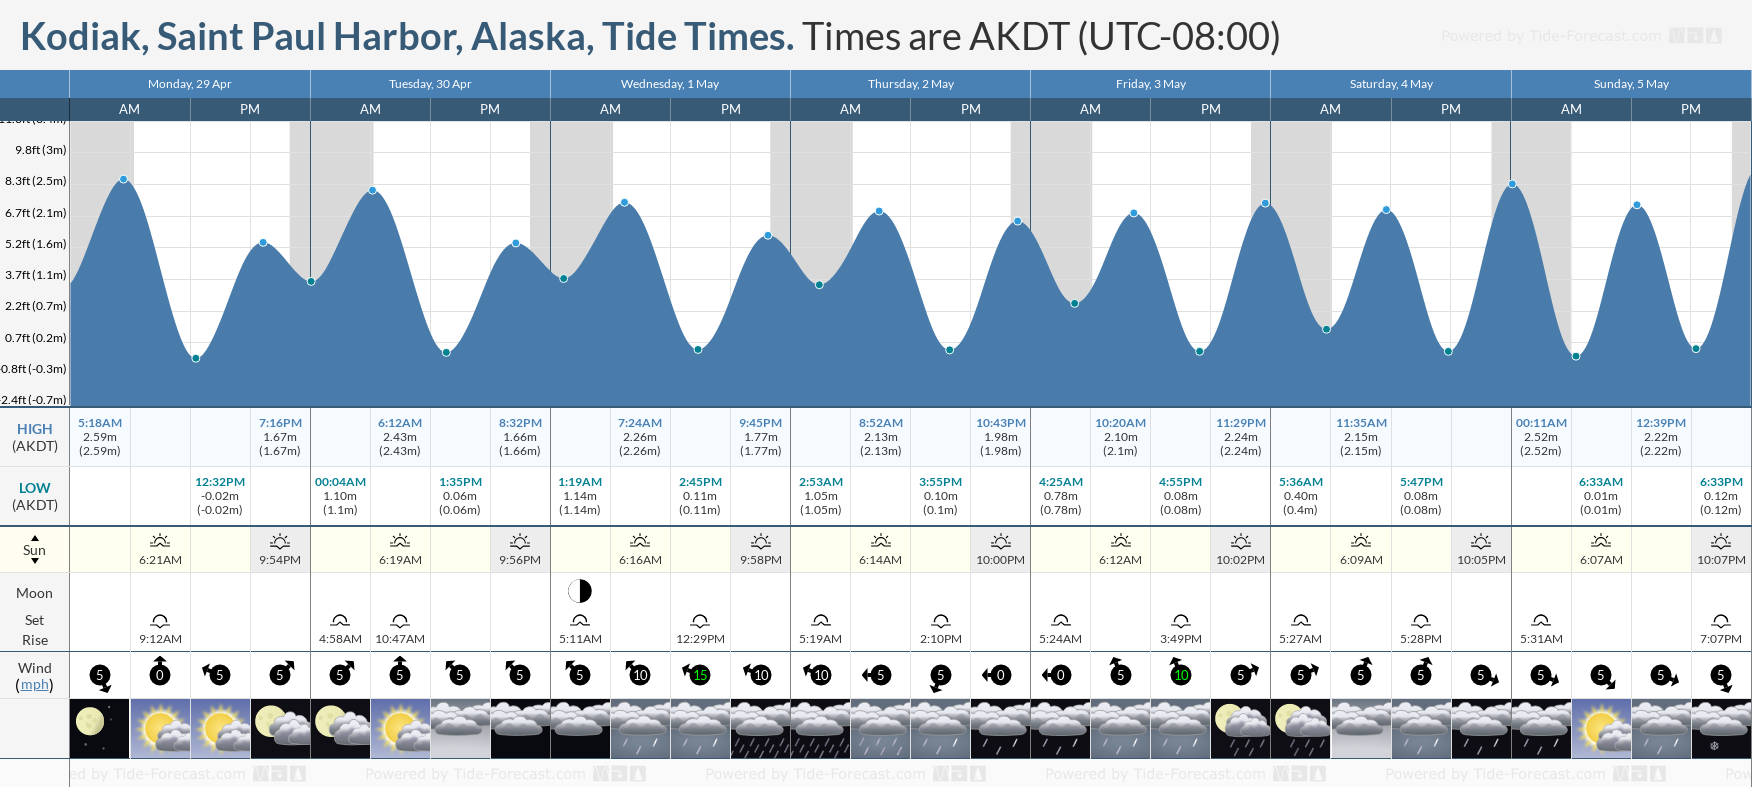 Kodiak, Saint Paul Harbor, Alaska Tide Chart including high and low tide times for the next 7 days